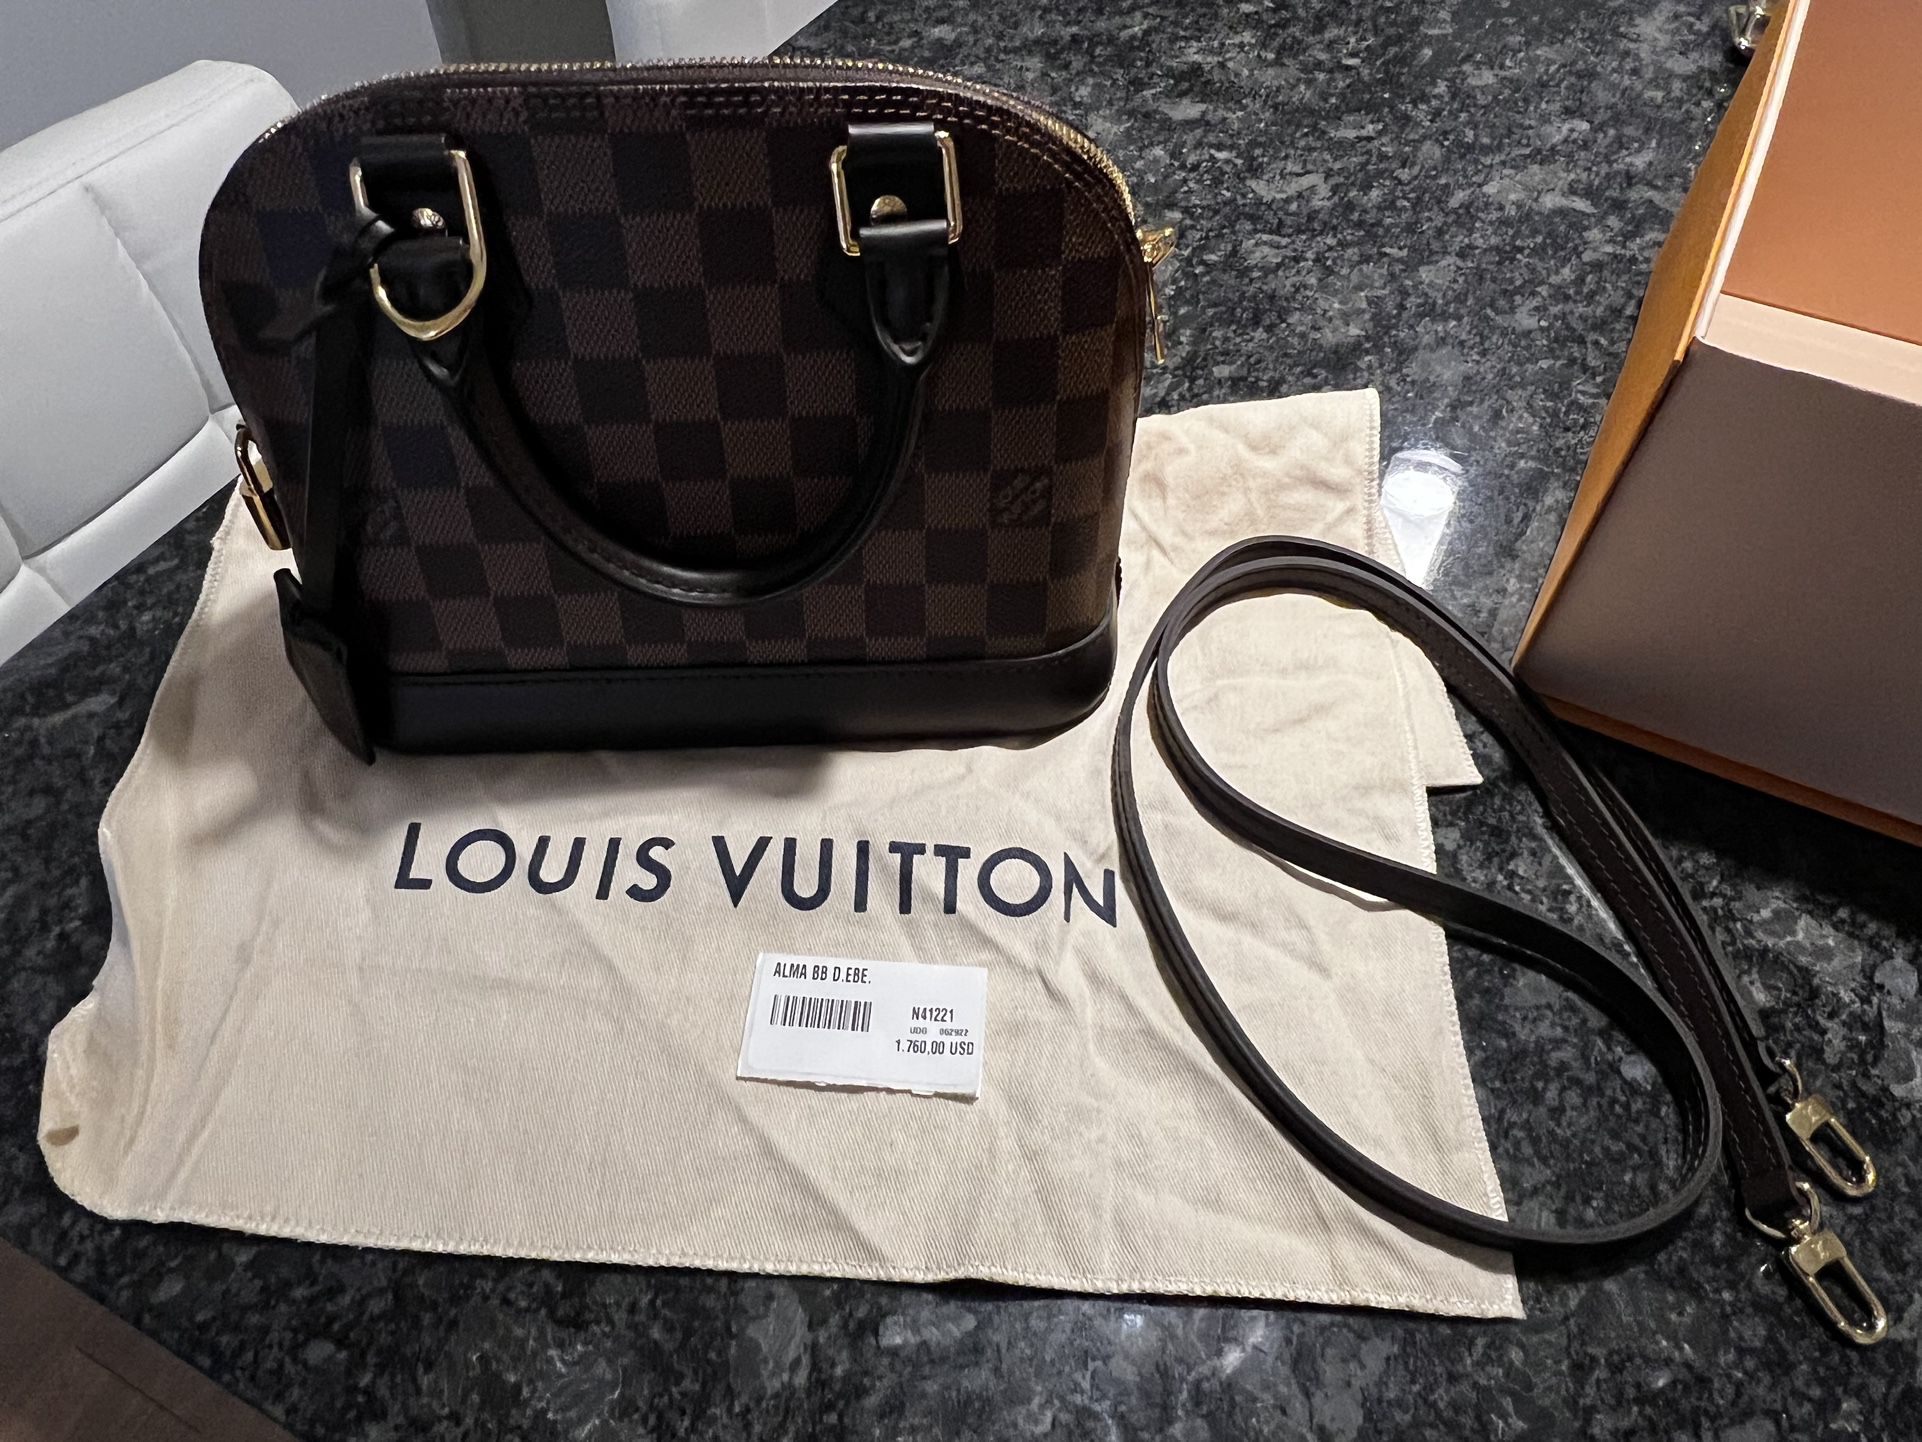 Louis Vuitton 3-in-1 Crossbody Bag for Sale in Dallas, TX - OfferUp